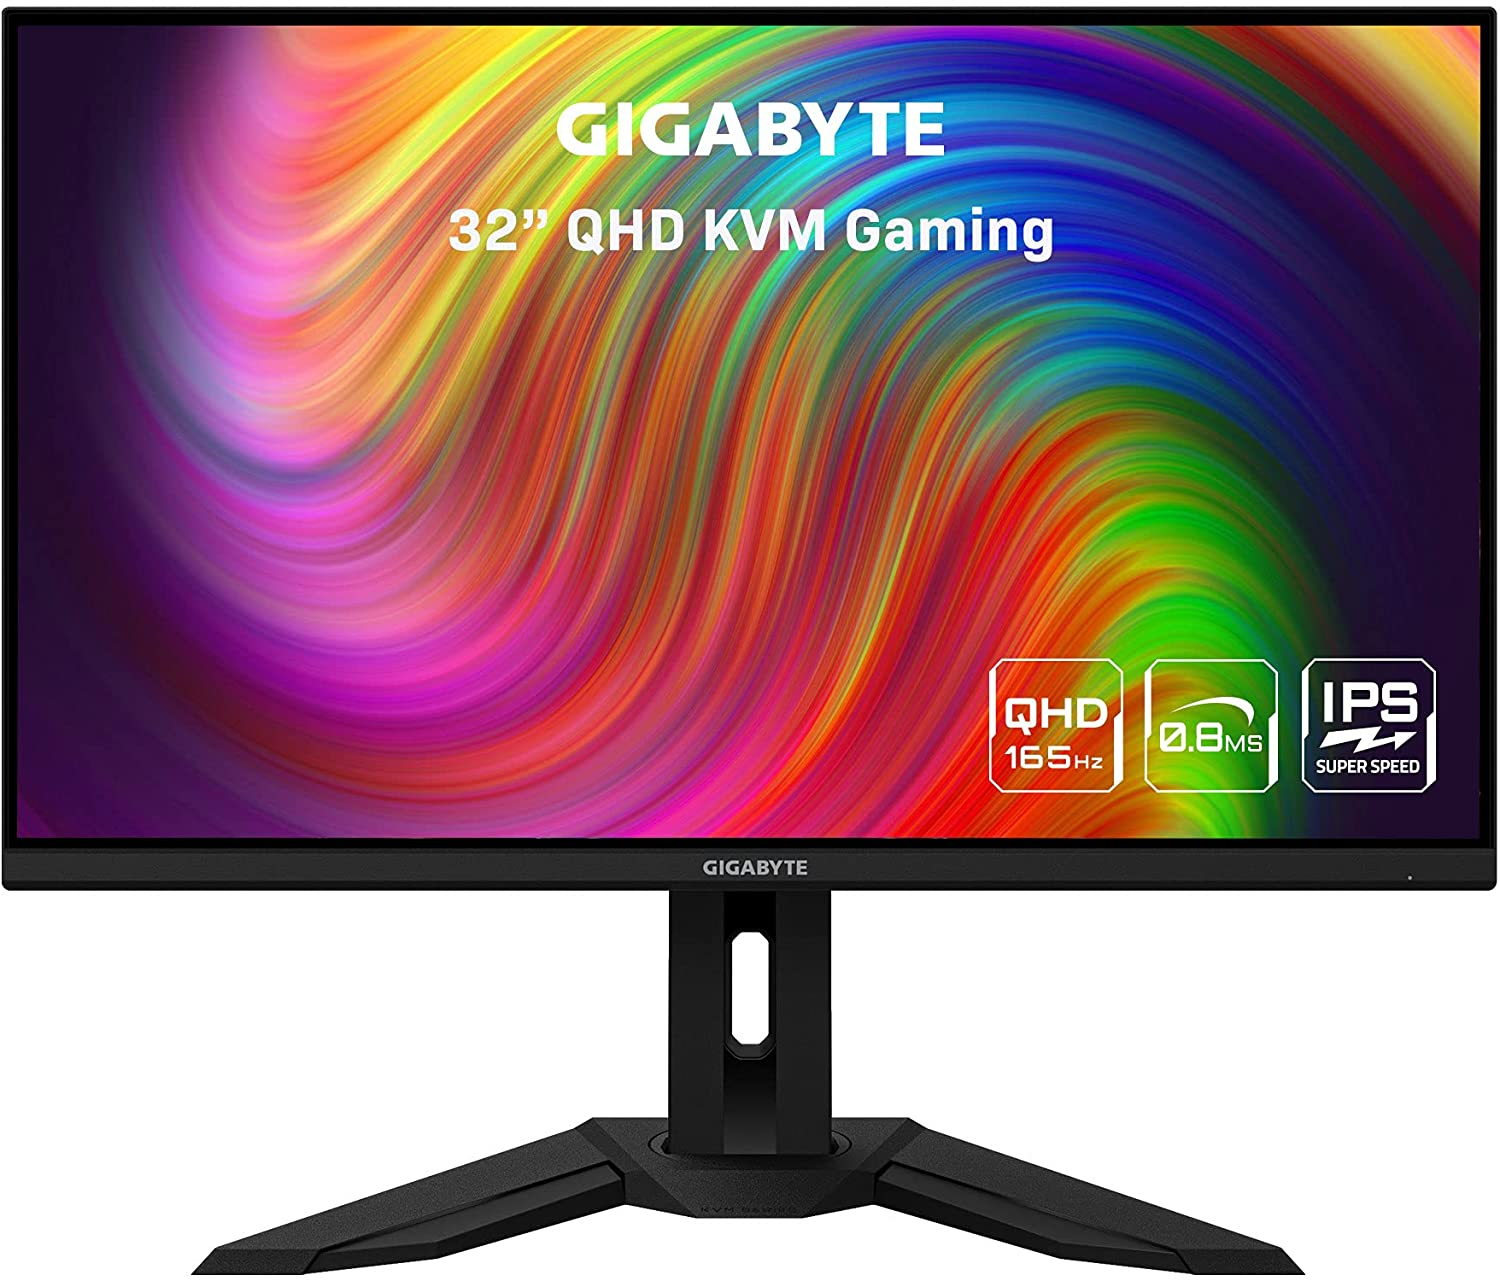 GIGABYTE M32Q 32" Gaming Monitor [165HZ, 1440P QHD KVM, 2560 x 1440 SS IPS, 0.8ms (MPRT), 94% DCI-P3, HDR Ready, FreeSync Premium] for $359.99 $359.99